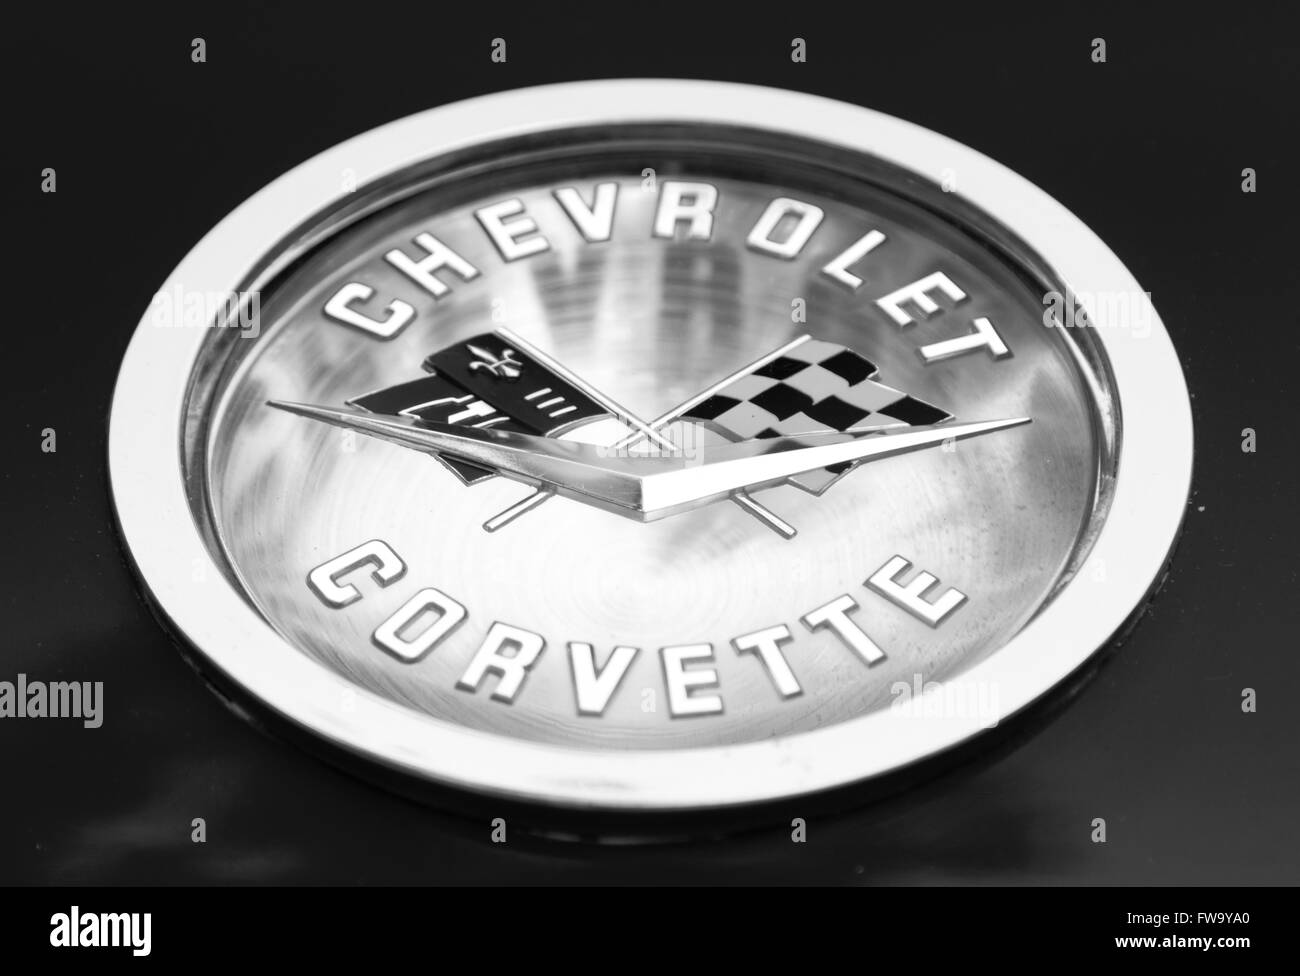 Chevrolet Corvette logo in black and white. Stock Photo